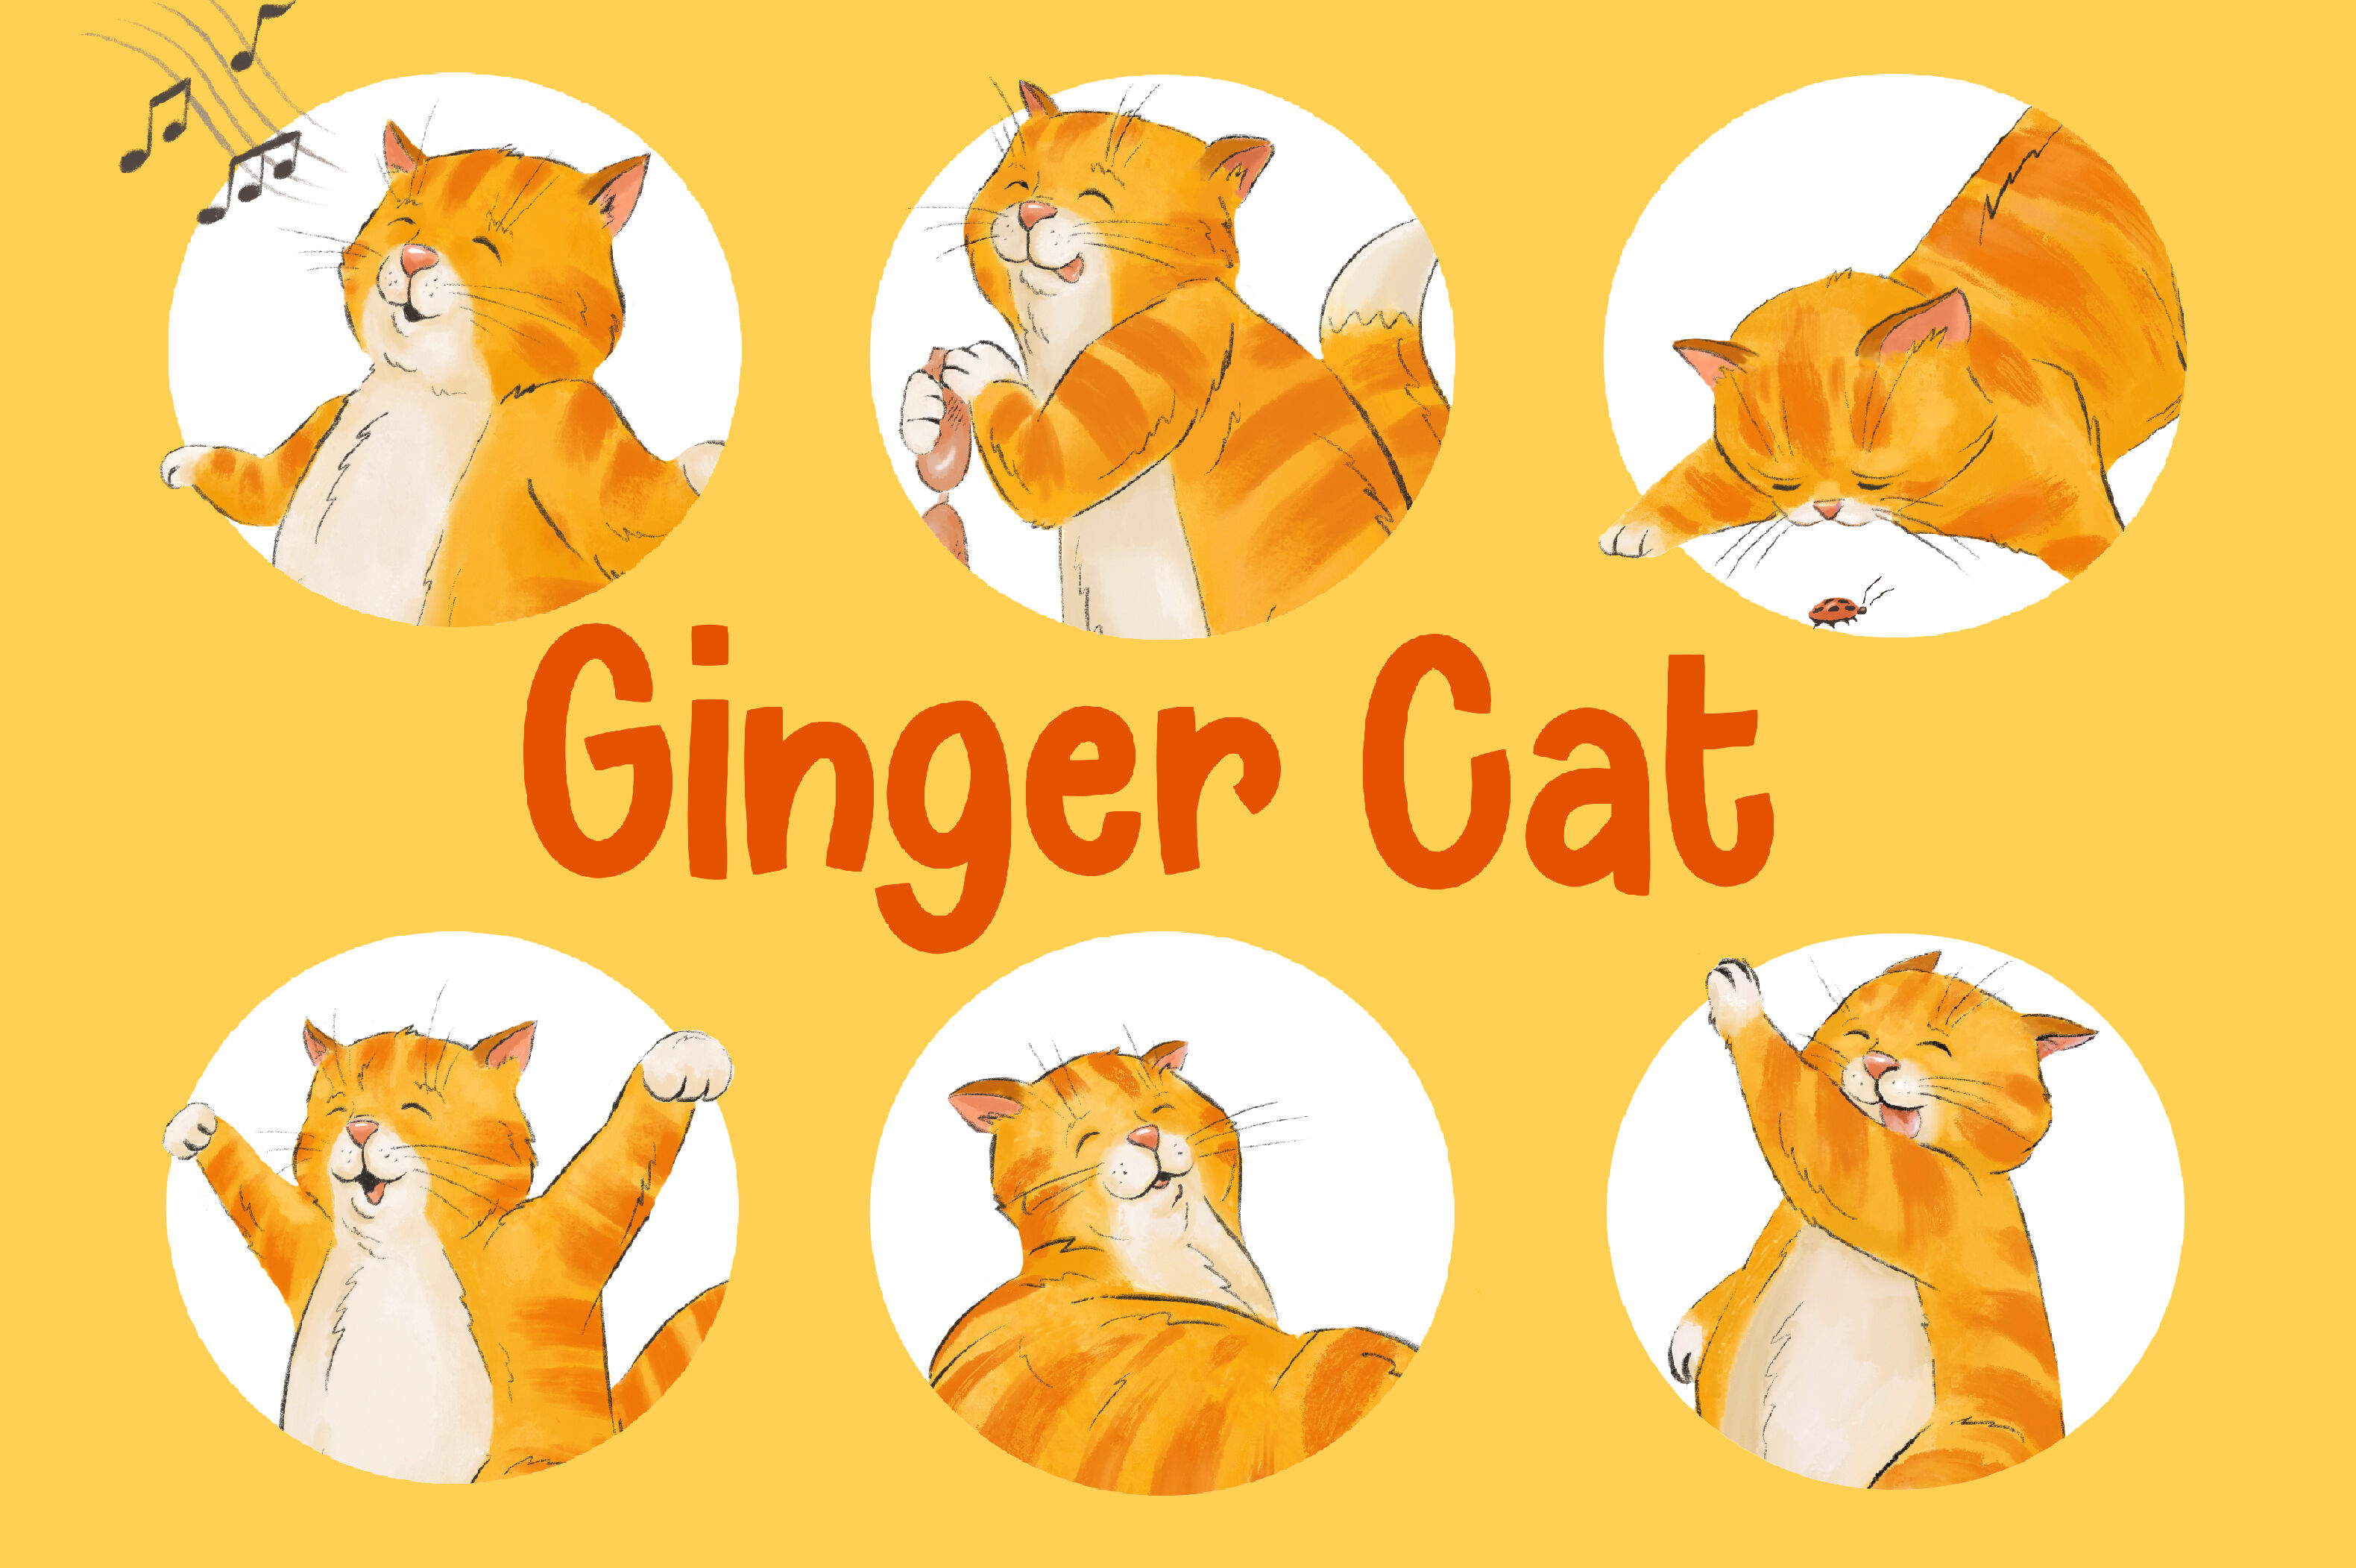 Ginger Cat By artstudio19 | TheHungryJPEG.com